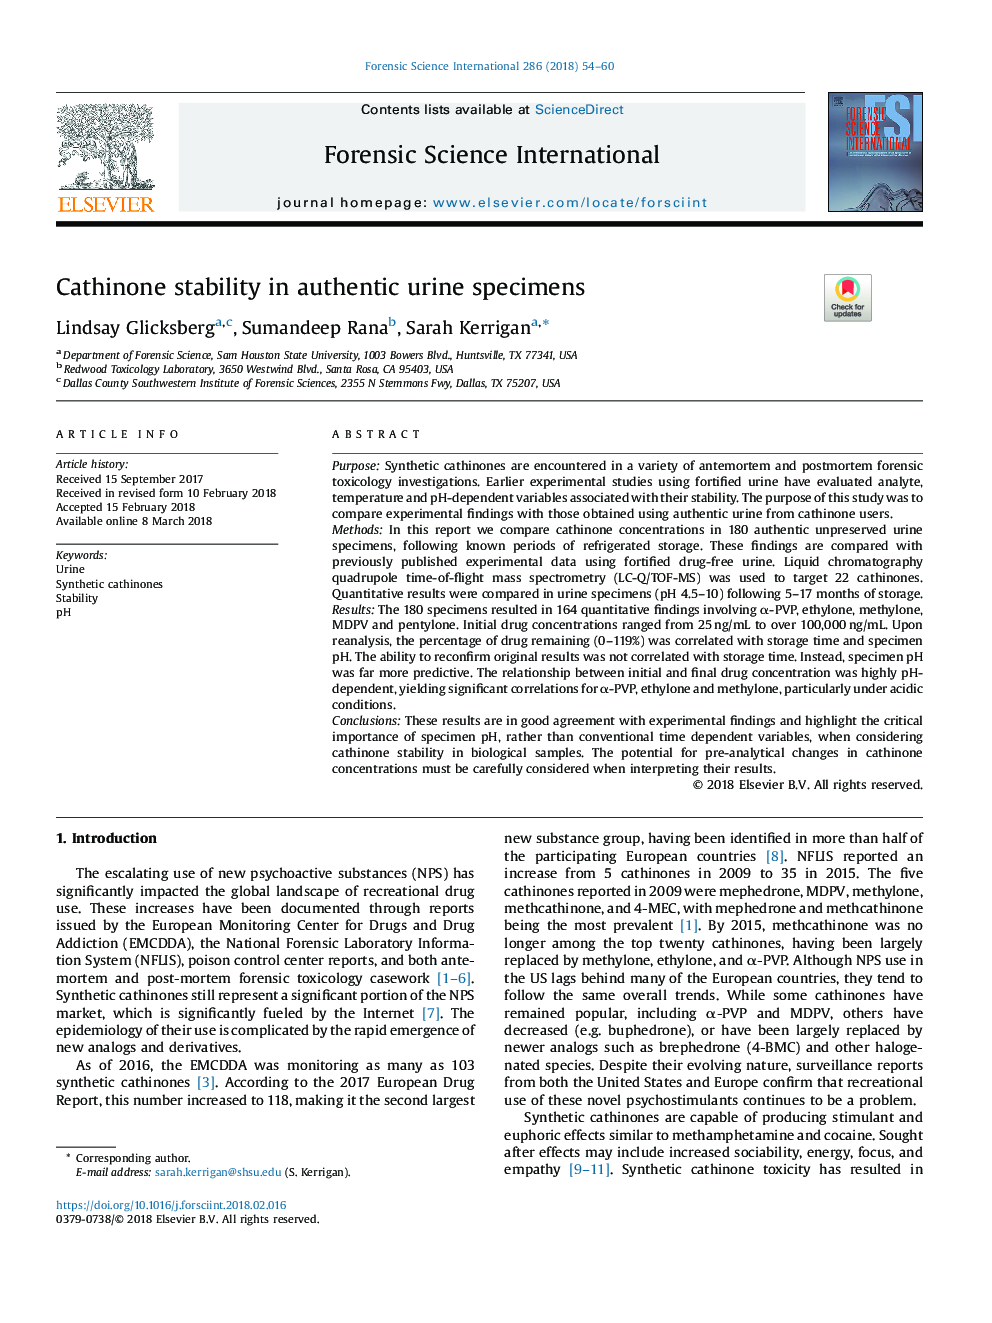 Cathinone stability in authentic urine specimens